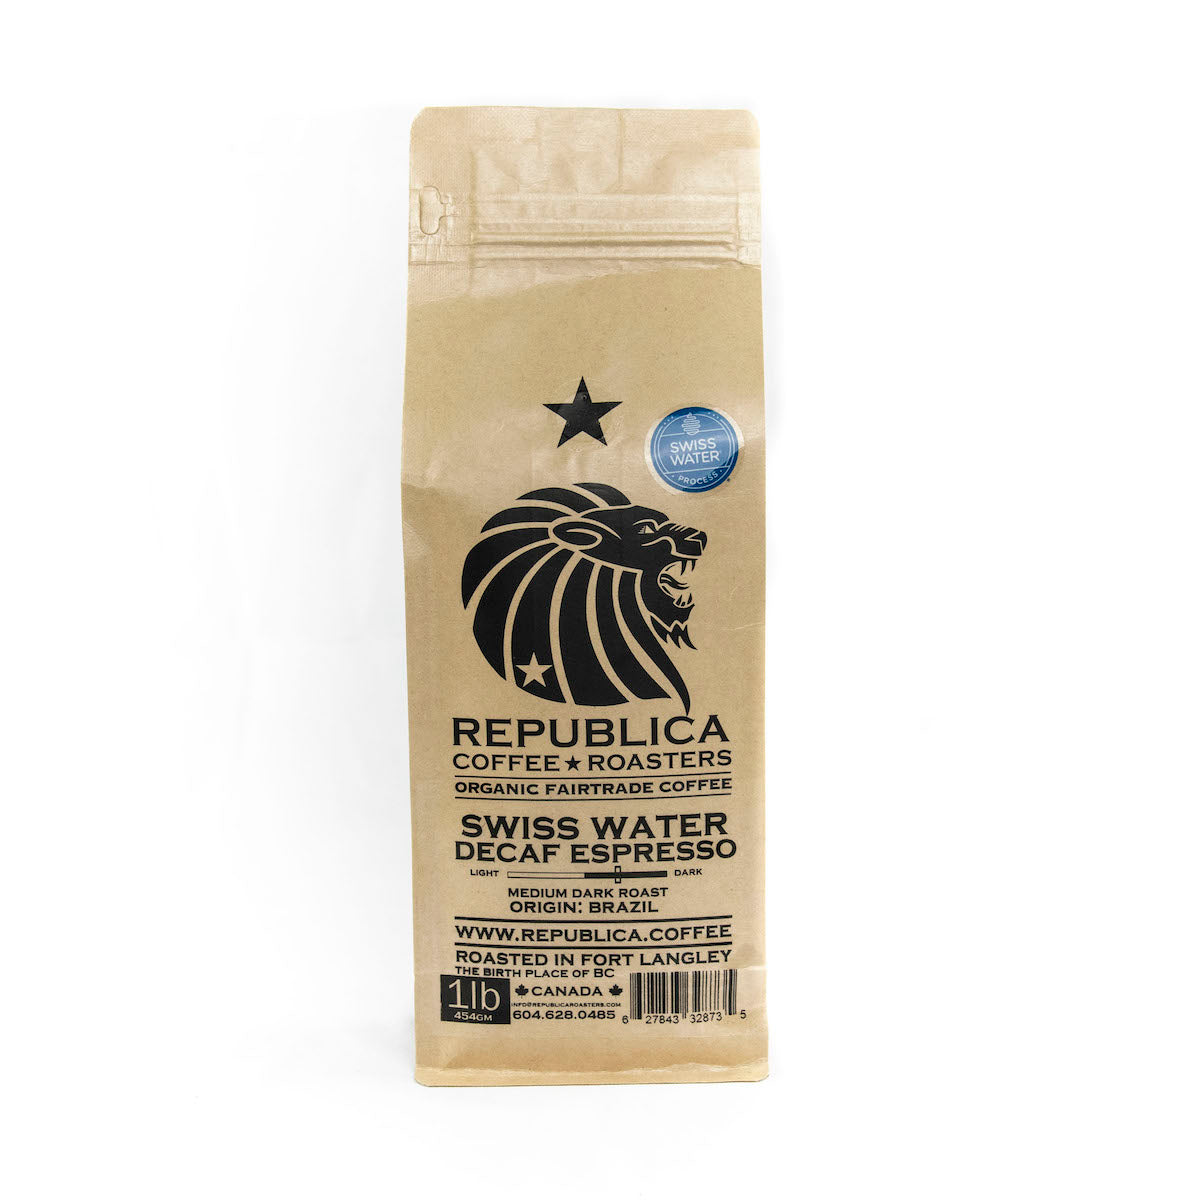 Republica Coffee - Swiss Water